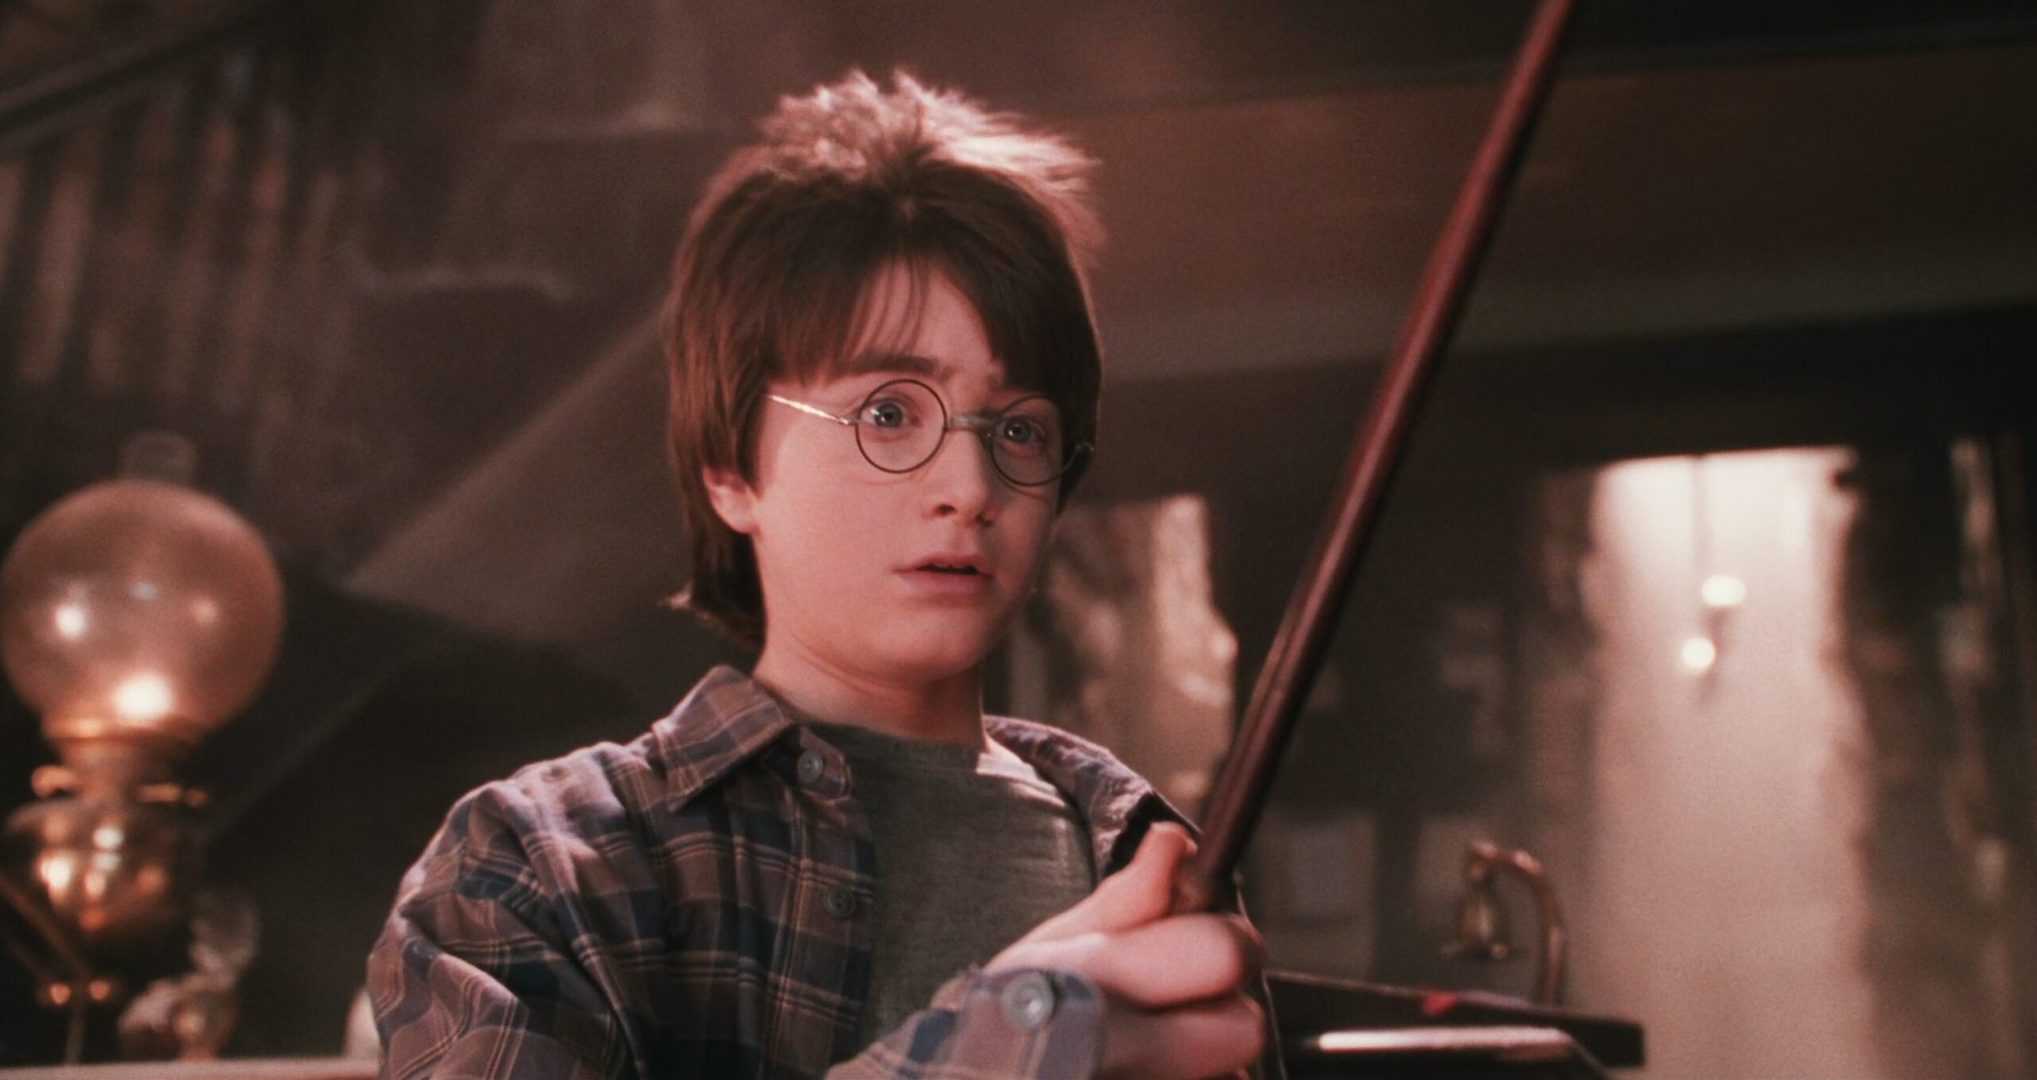 Harry Potter quiz